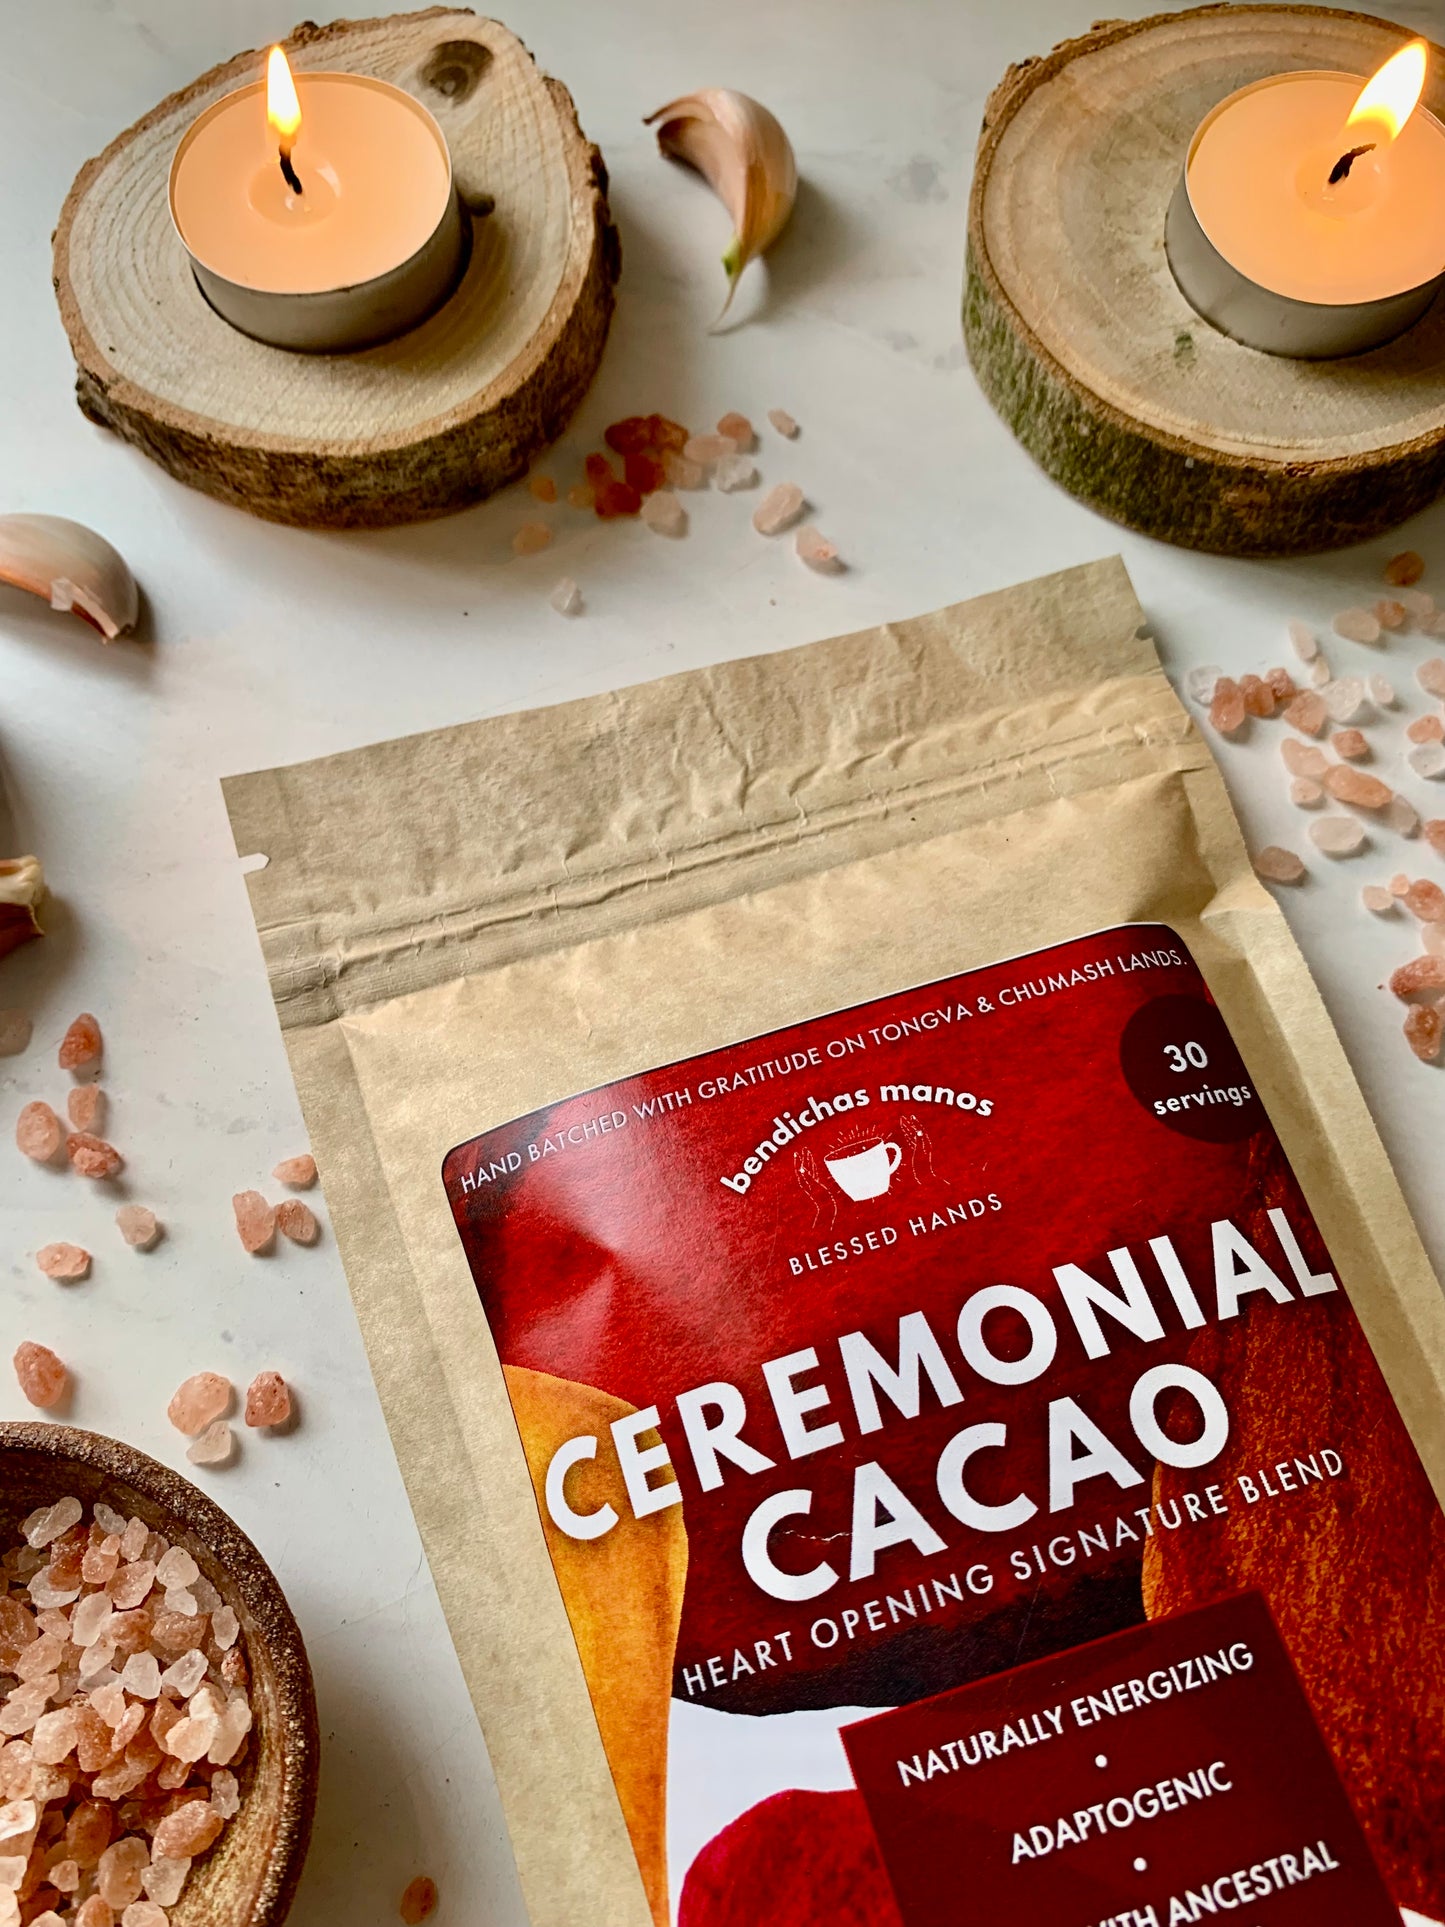 30 Serving Ceremonial Cacao Signature Blend